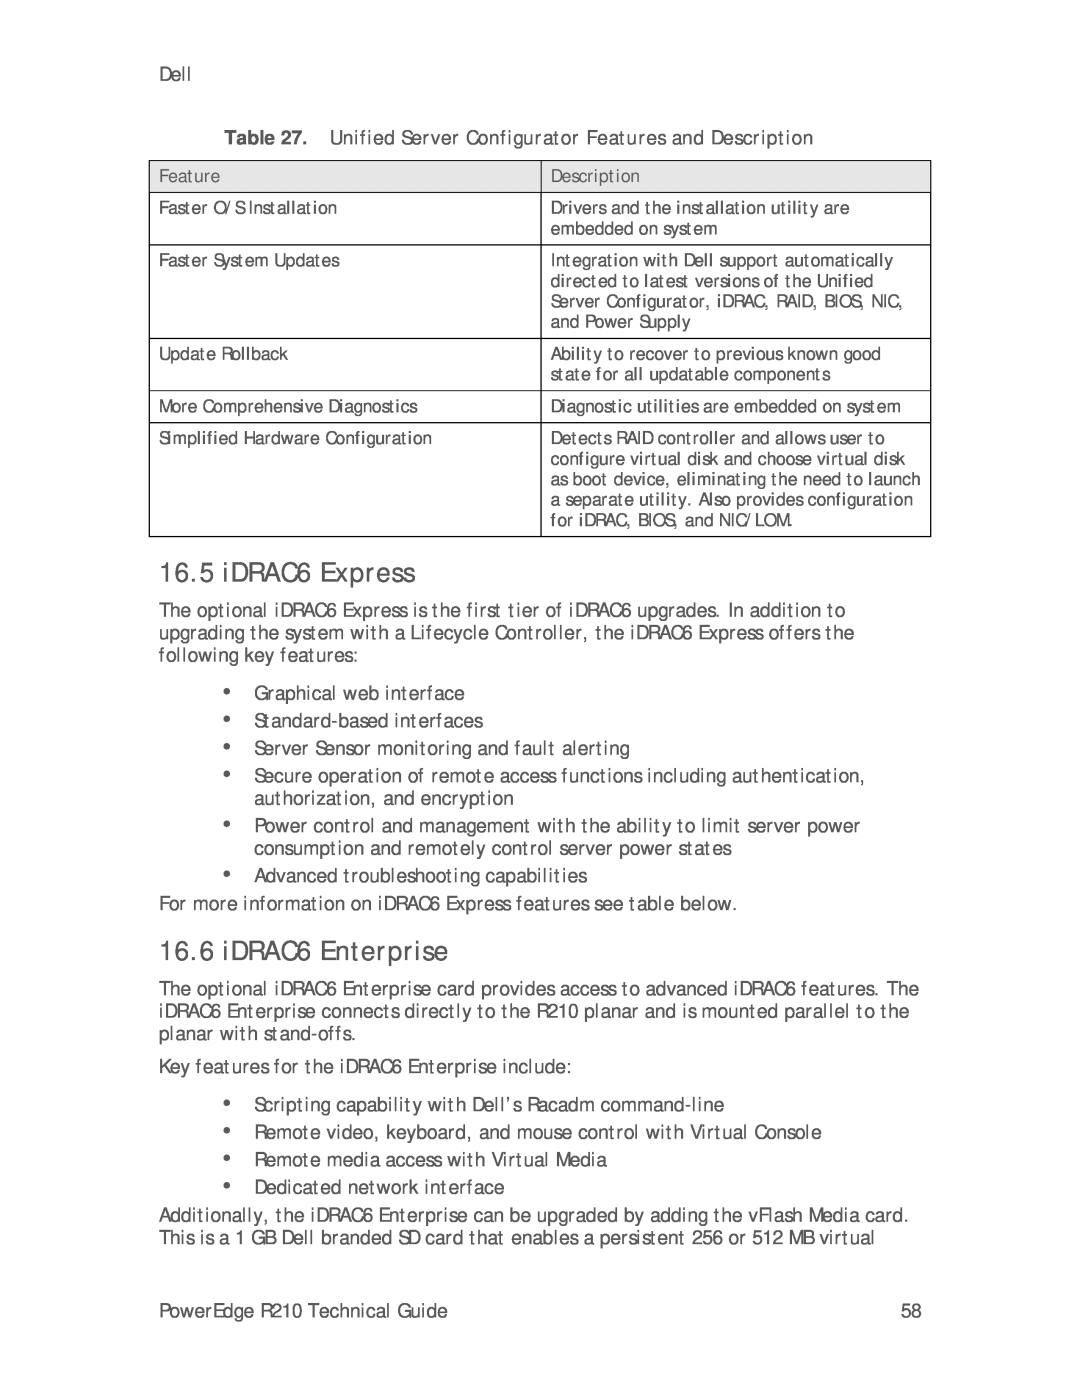 Dell R210 manual iDRAC6 Express, iDRAC6 Enterprise, Unified Server Configurator Features and Description 